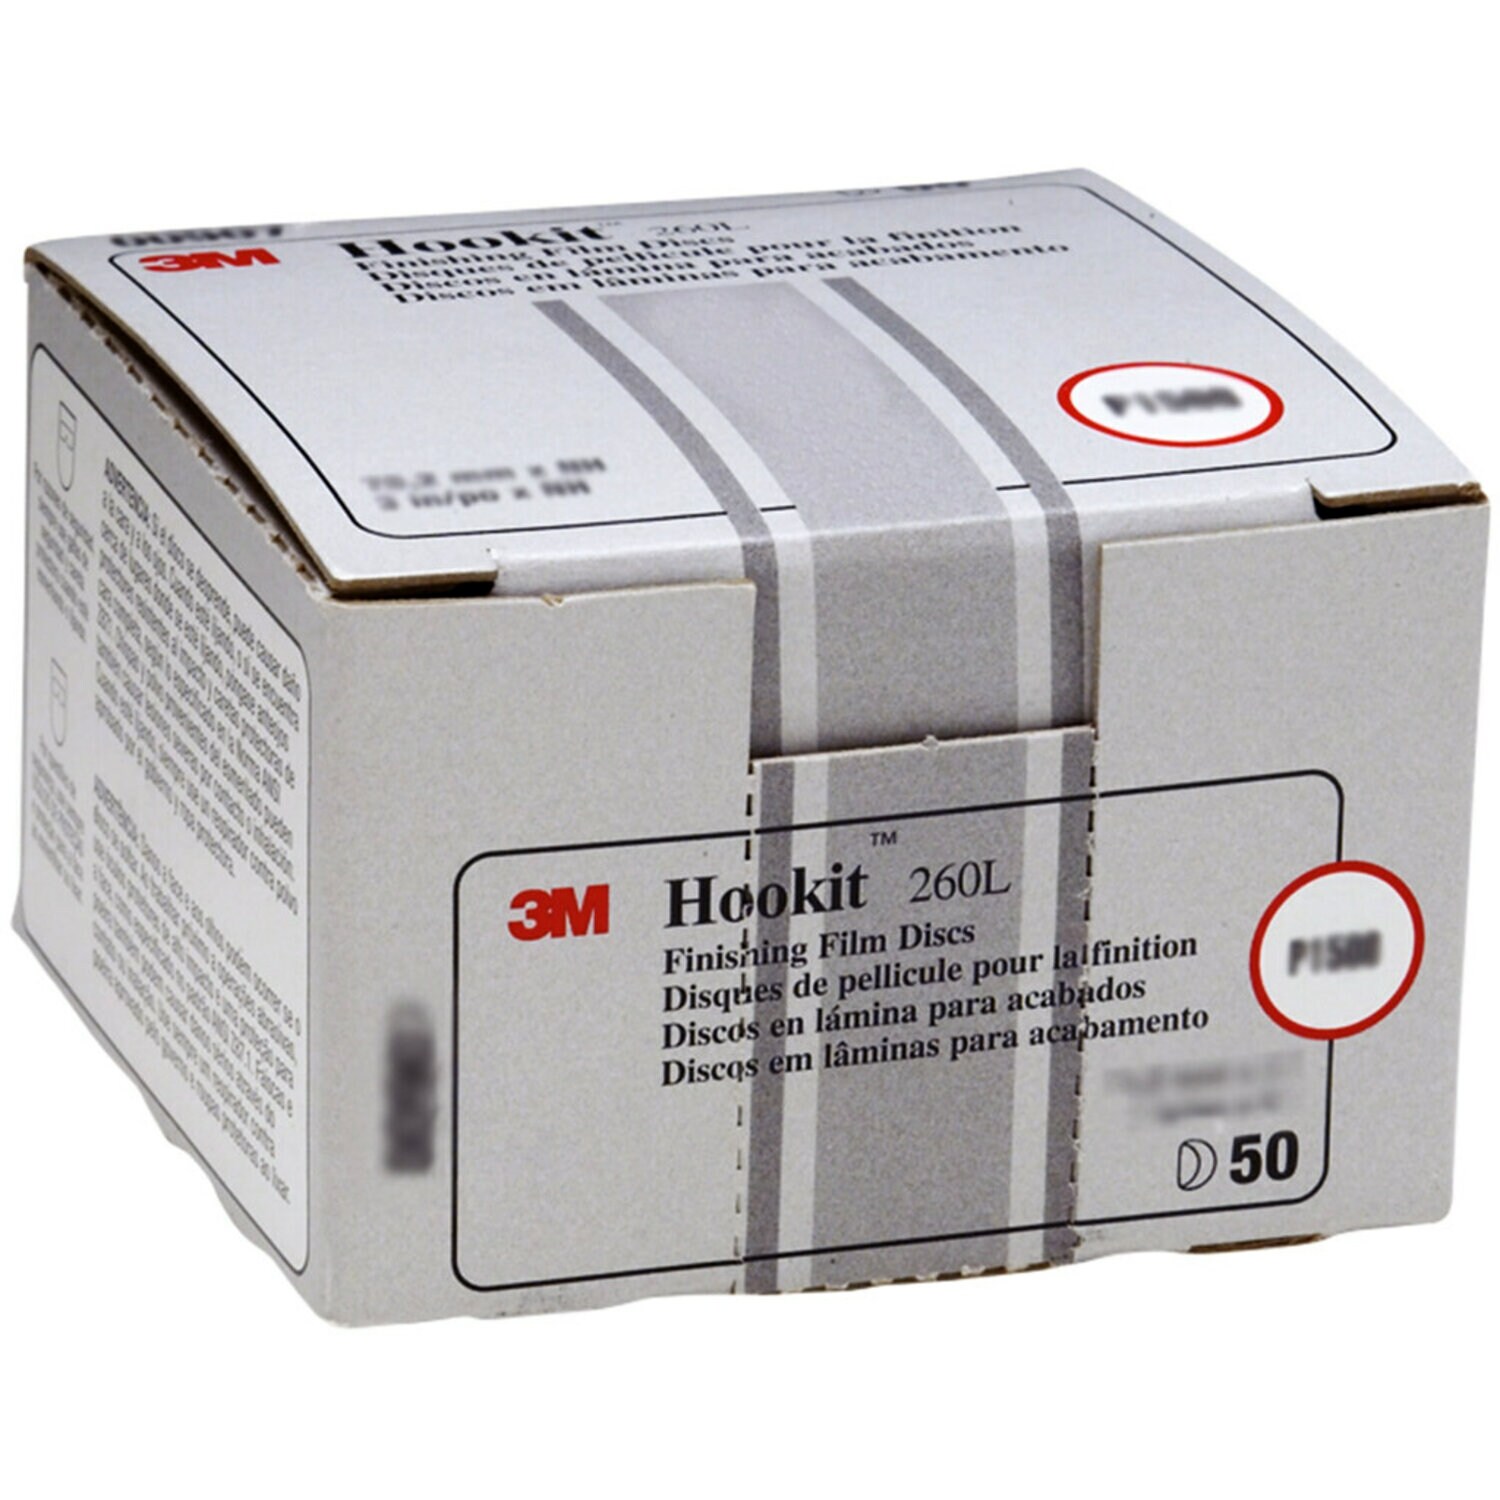 7000120388 - 3M Hookit Finishing Film Abrasive Disc 260L, 00955, 5 in, P600, 100
discs per carton, 4 cartons per case